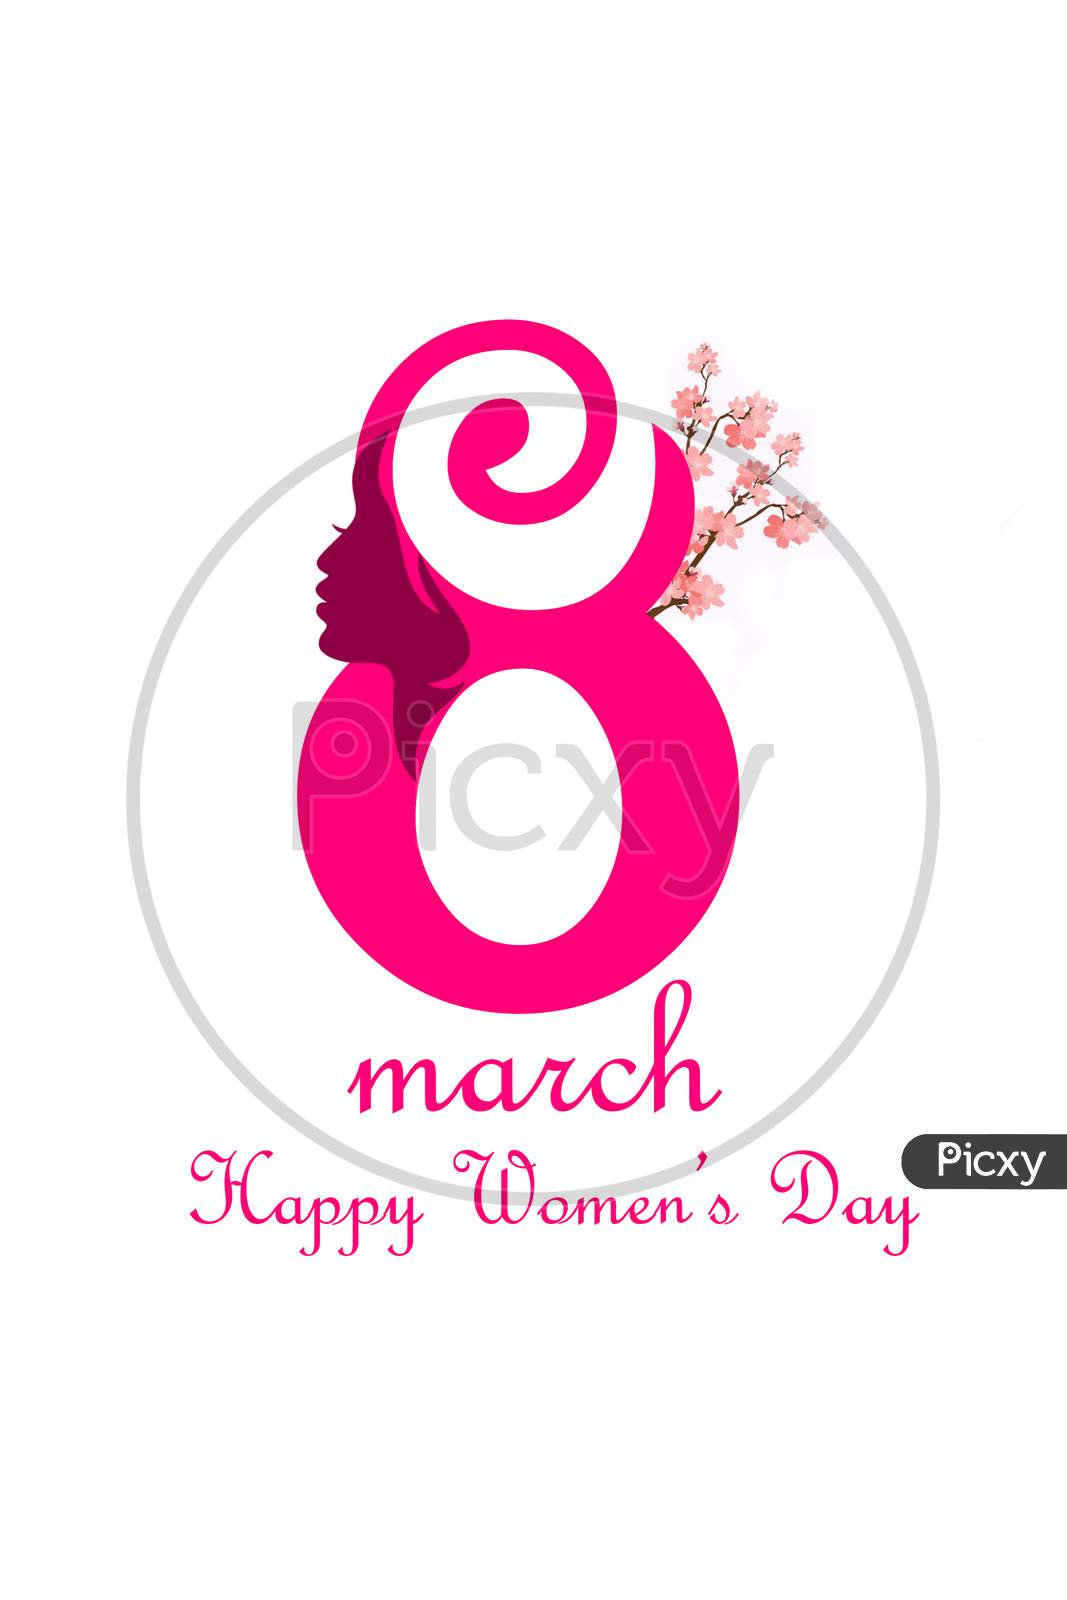 International Women'S Day Greetings